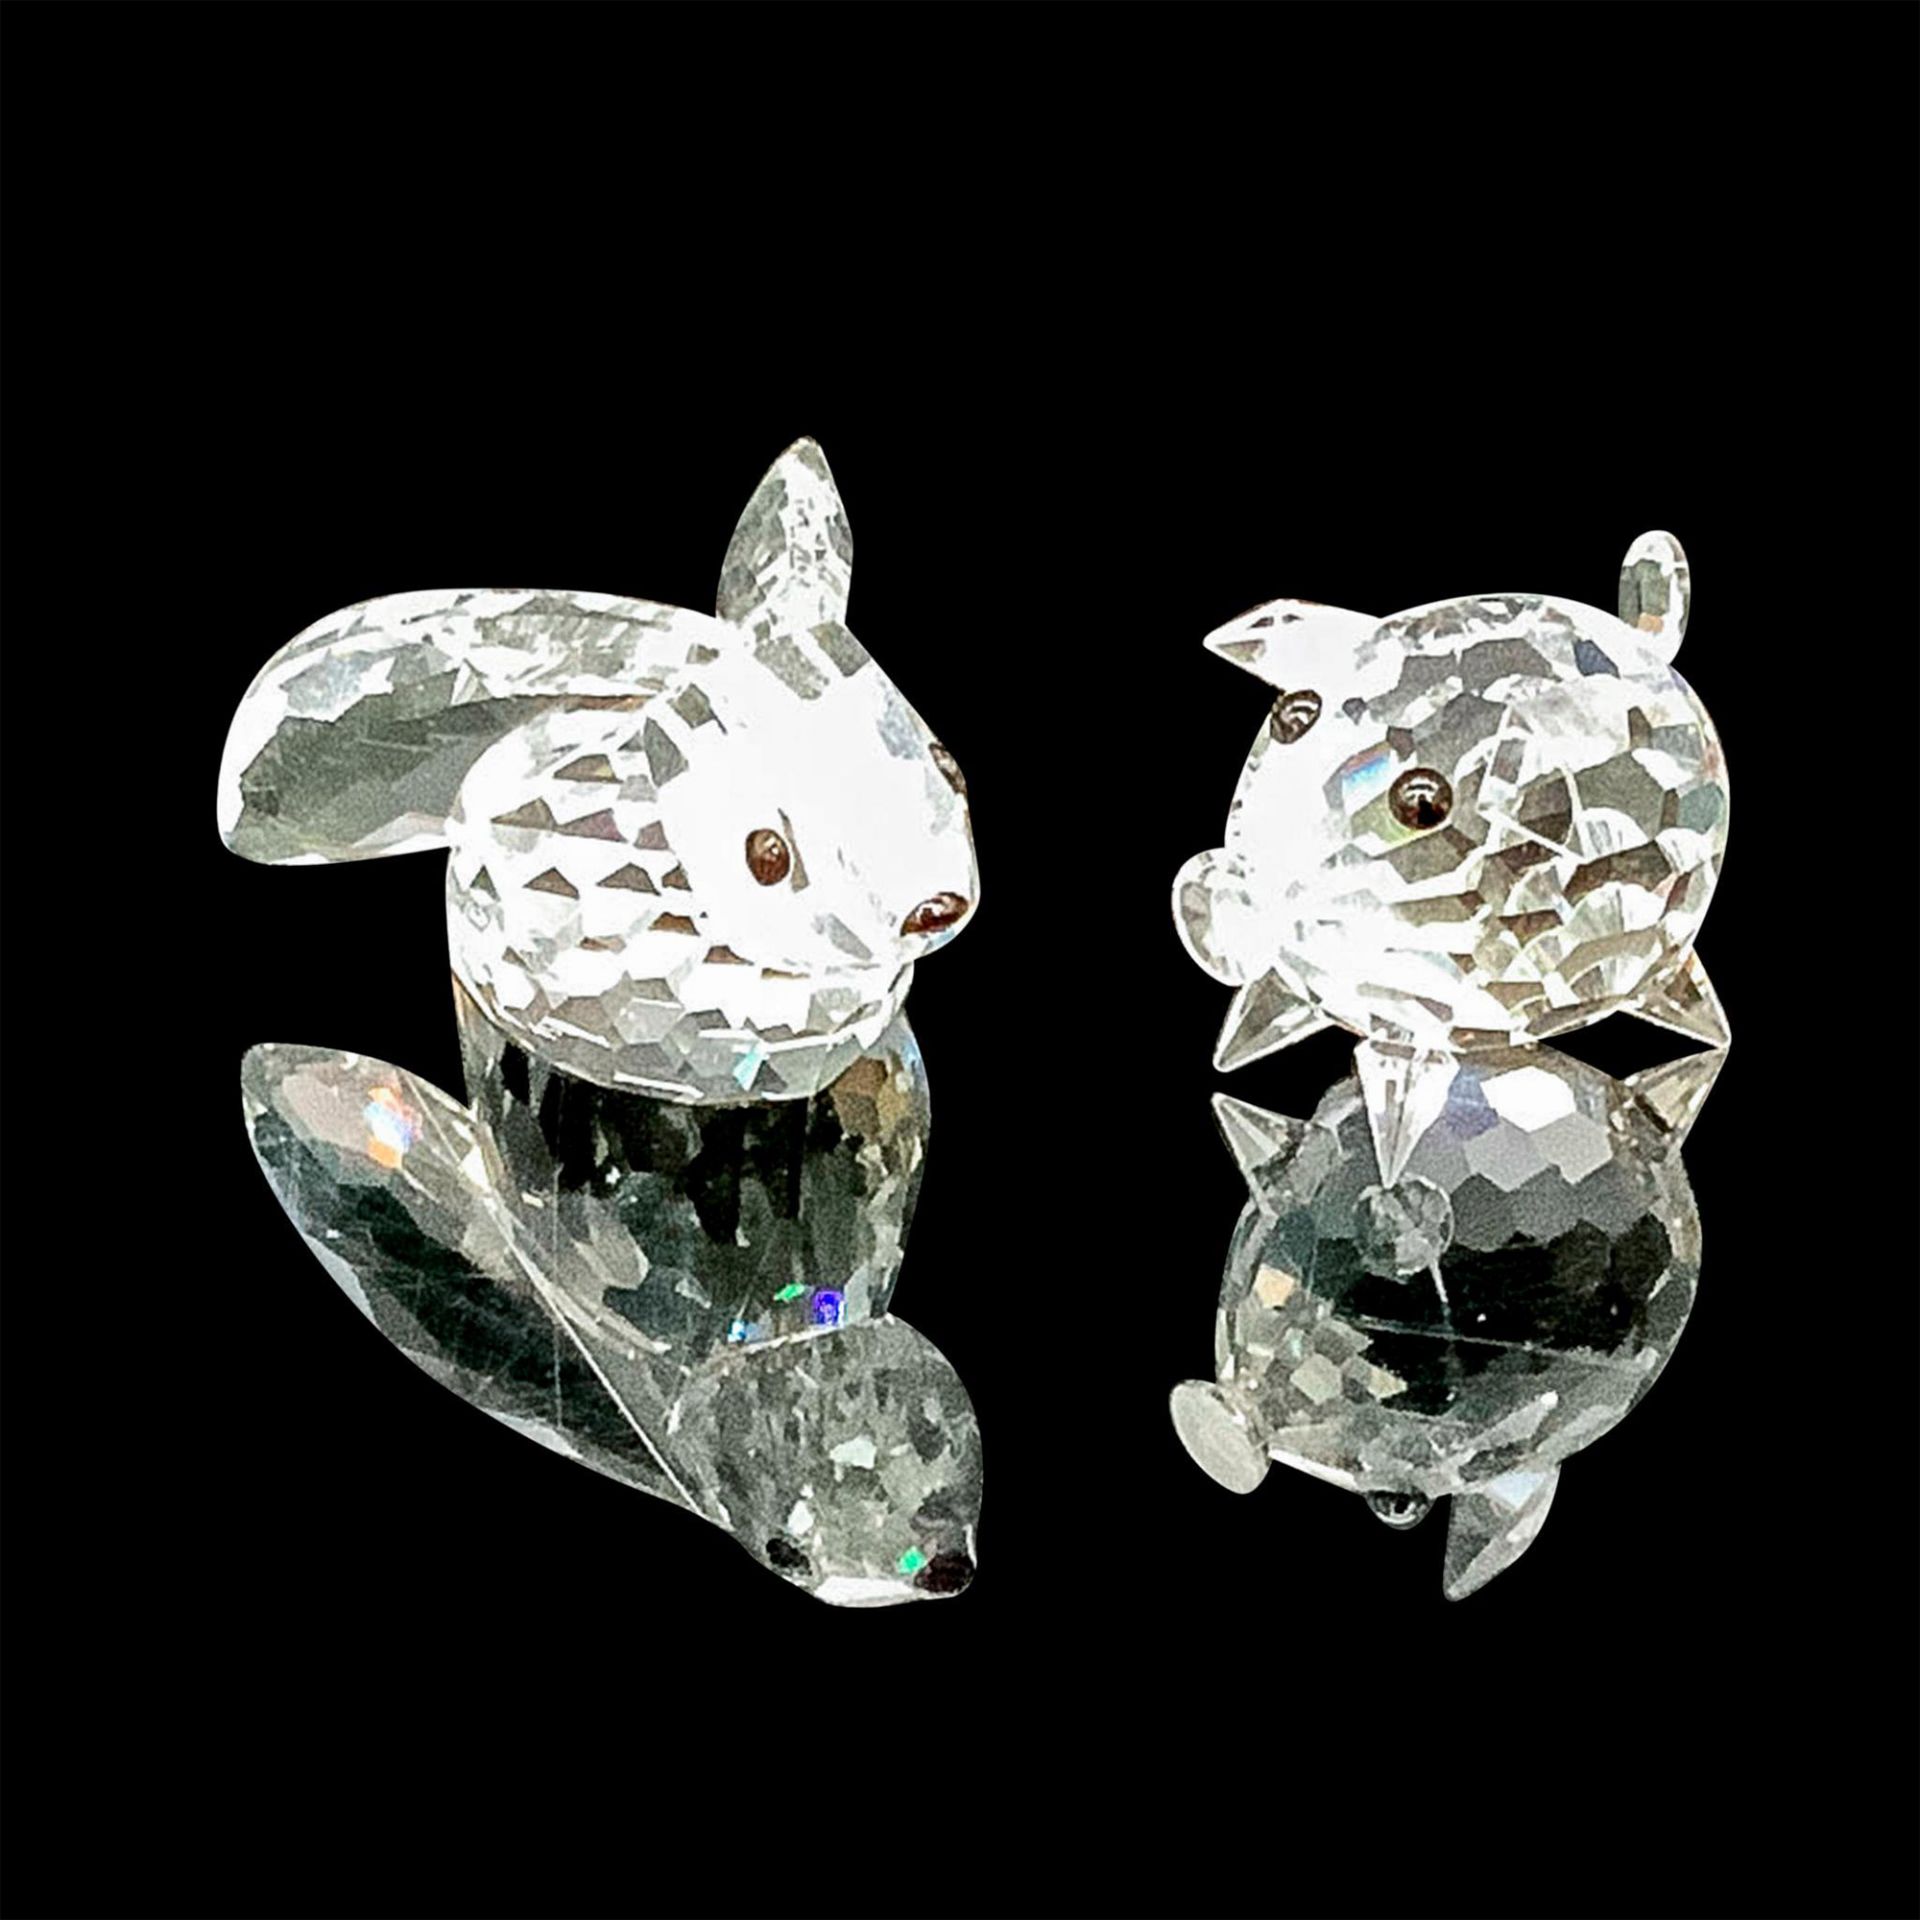 2pc Swarovski Crystal Figurines, Small Bunny & Pig With Tail